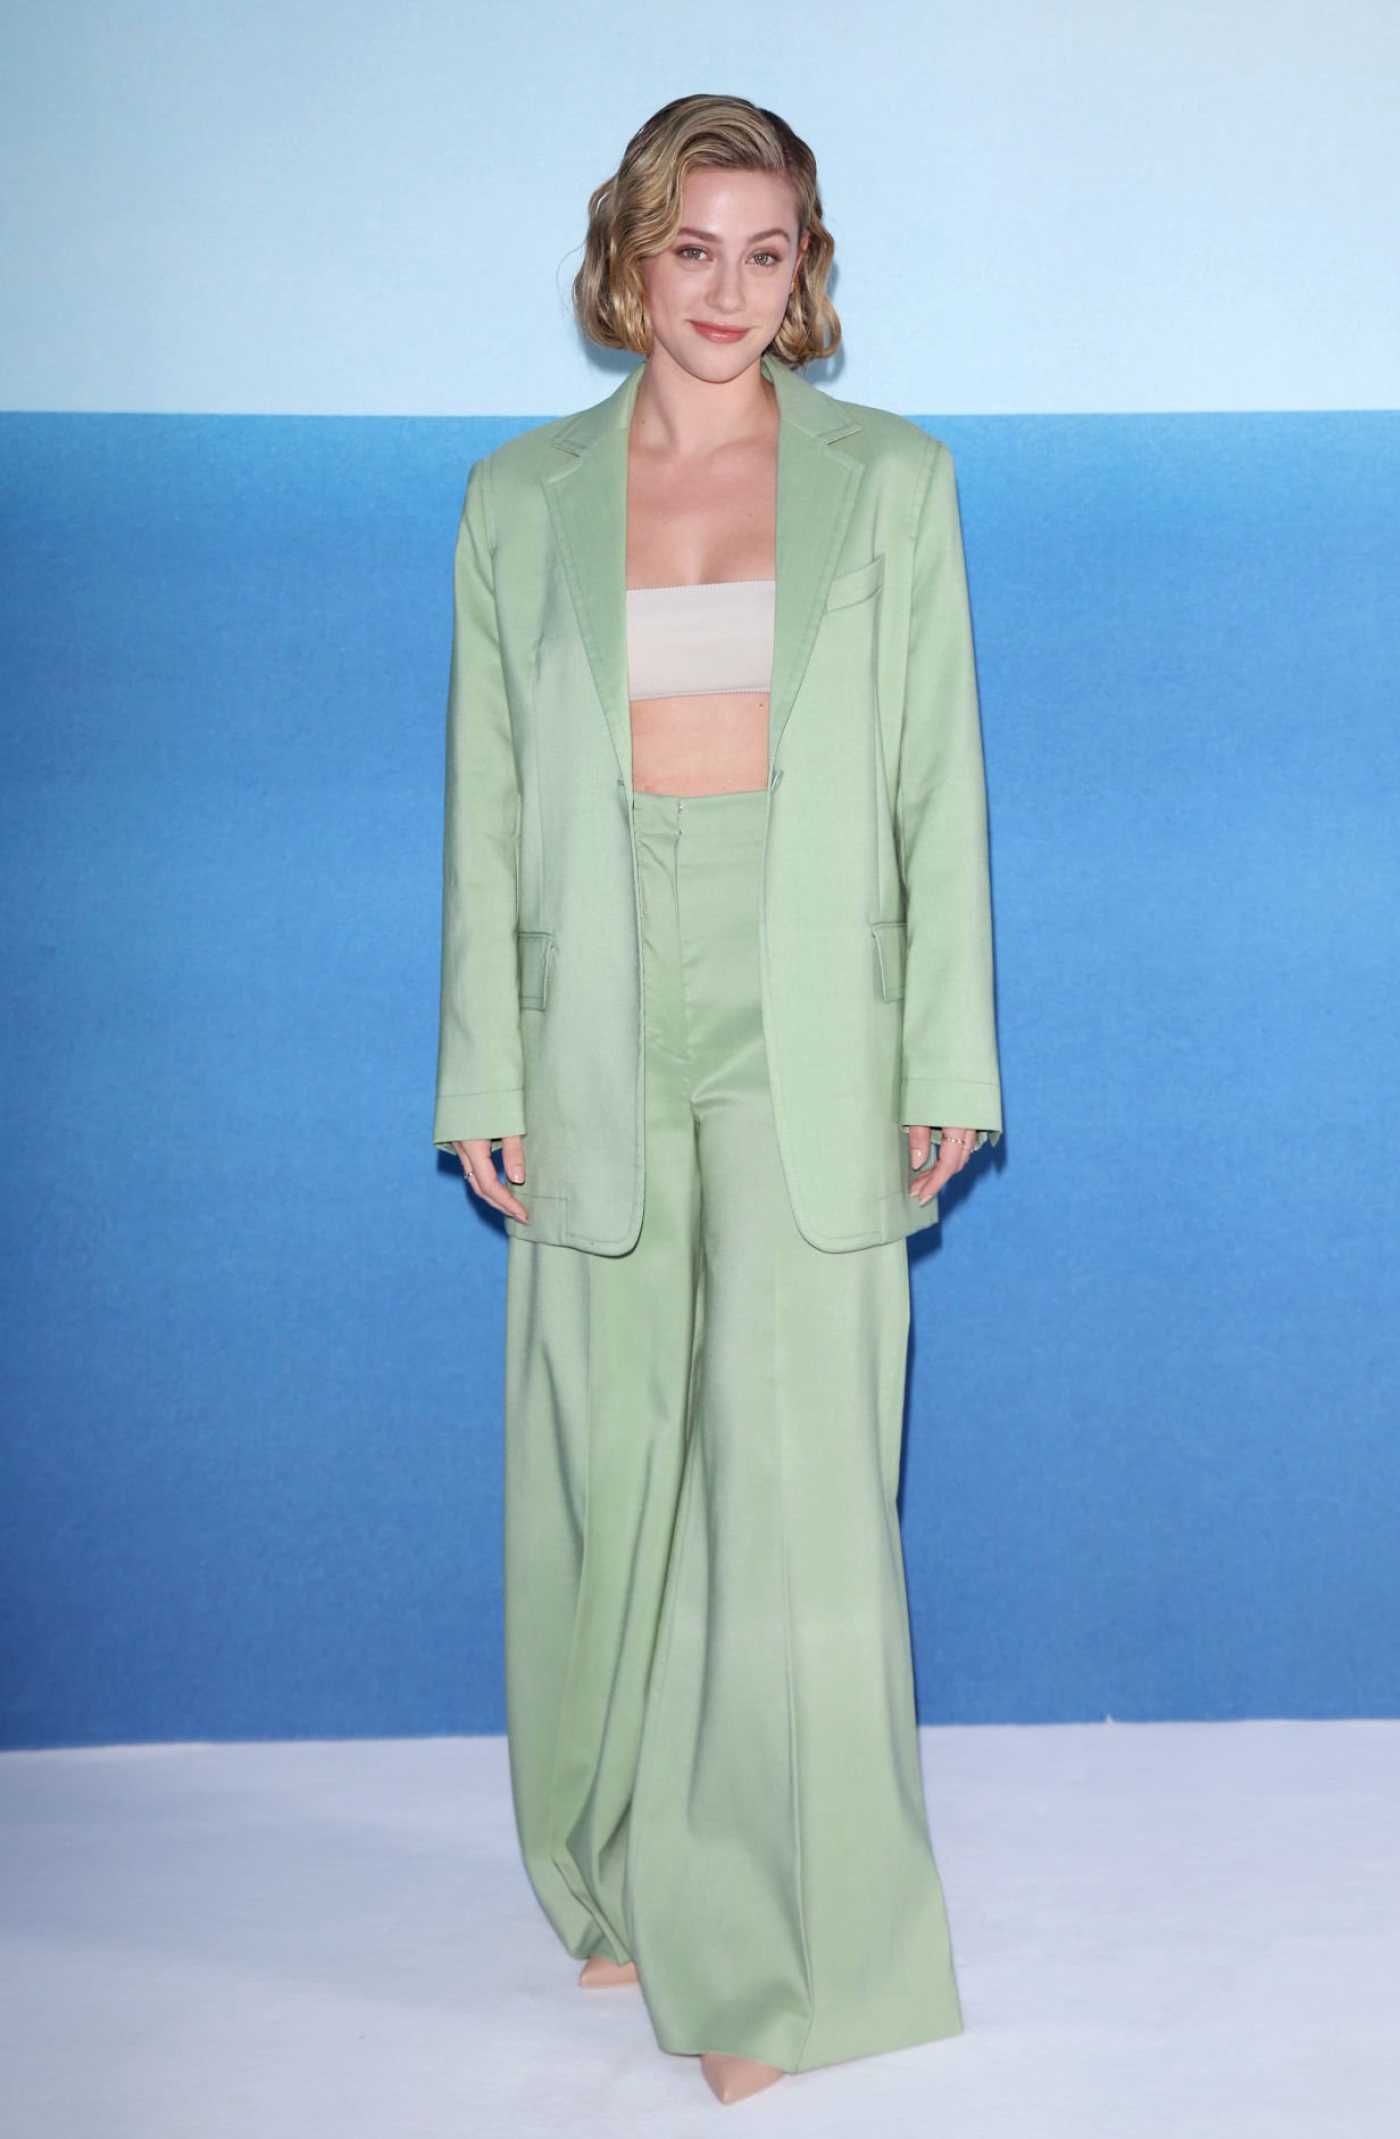 Lili Reinhart in a Light Green Pantsuit Attends the Max Mara Fashion Show During 2022 Milan Fashion Week in Milan 09/22/2022